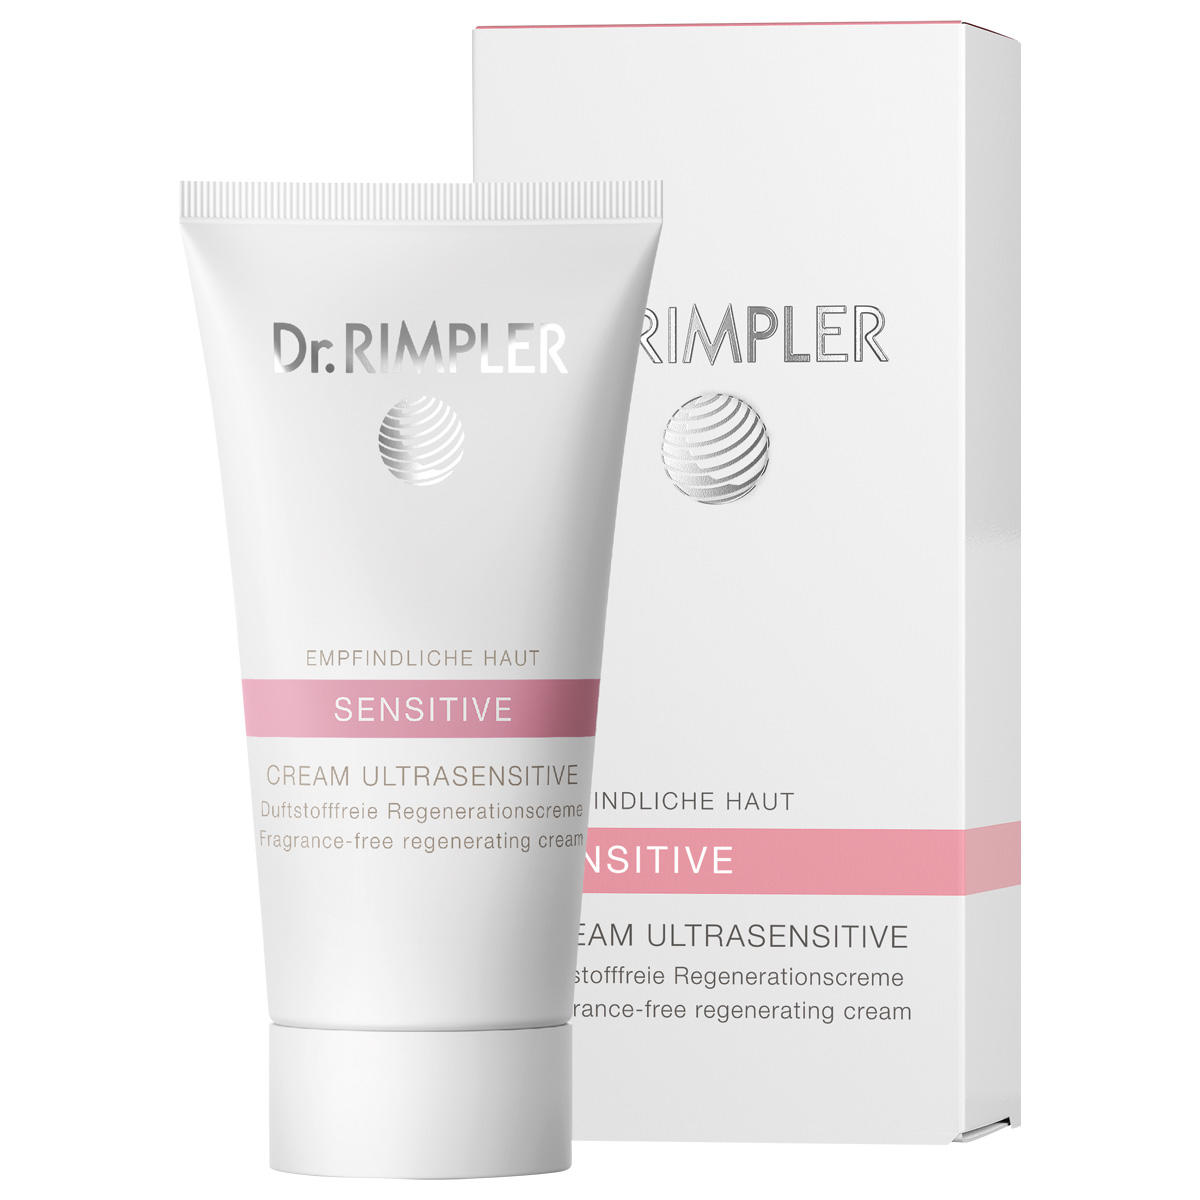 Dr. RIMPLER SENSITIVE Cream Ultrasensitive 50 ml - 2